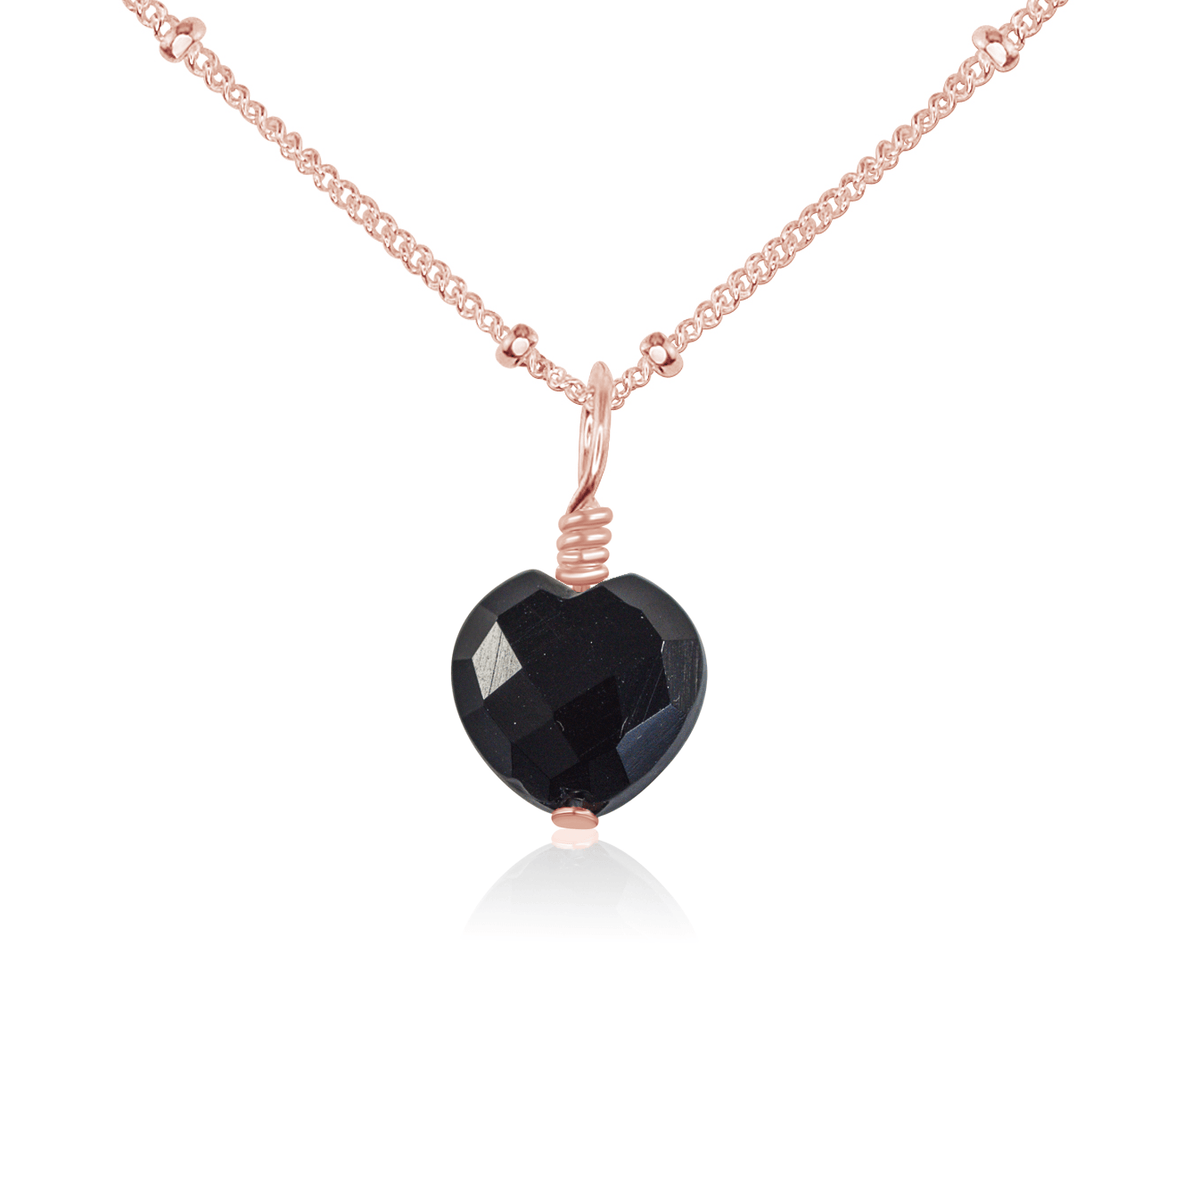 Black Onyx Crystal Heart Pendant Necklace - Black Onyx Crystal Heart Pendant Necklace - 14k Rose Gold Fill / Satellite - Luna Tide Handmade Crystal Jewellery